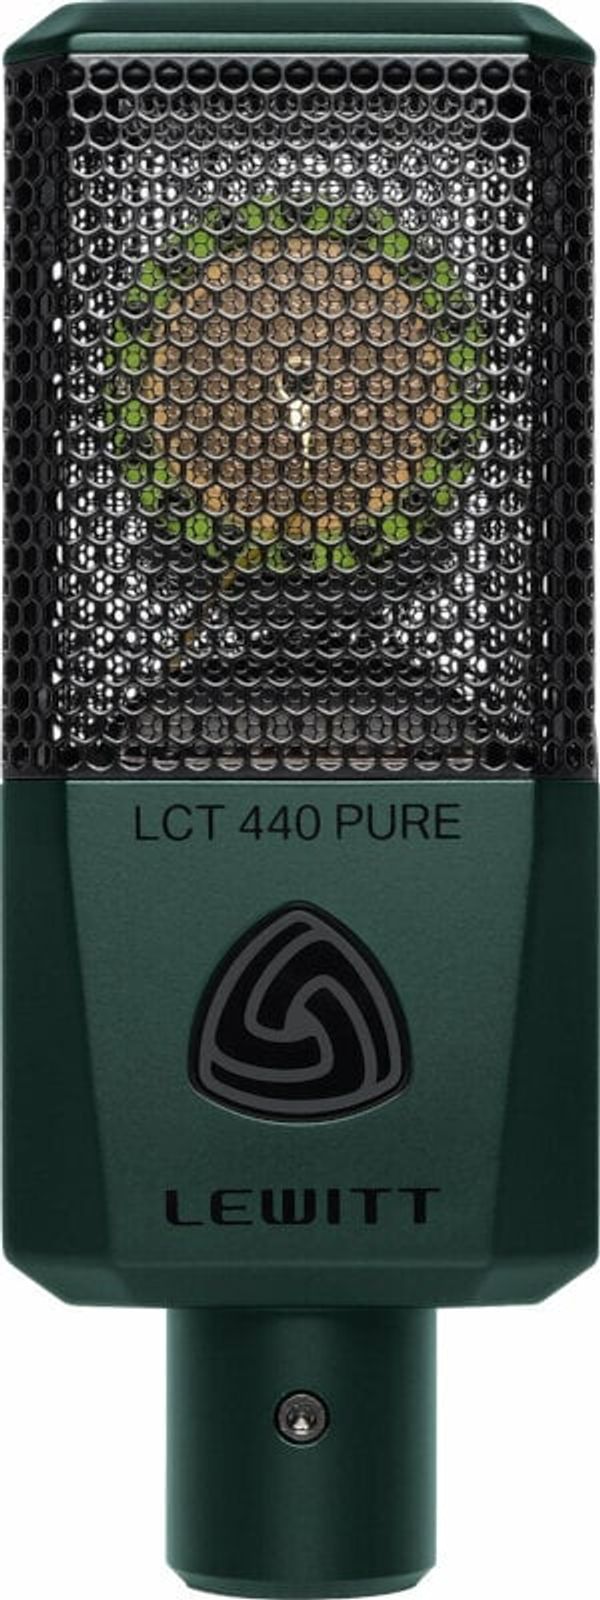 LEWITT LEWITT LCT 440 PURE VIDA EDITION Kondenzatorski studijski mikrofon